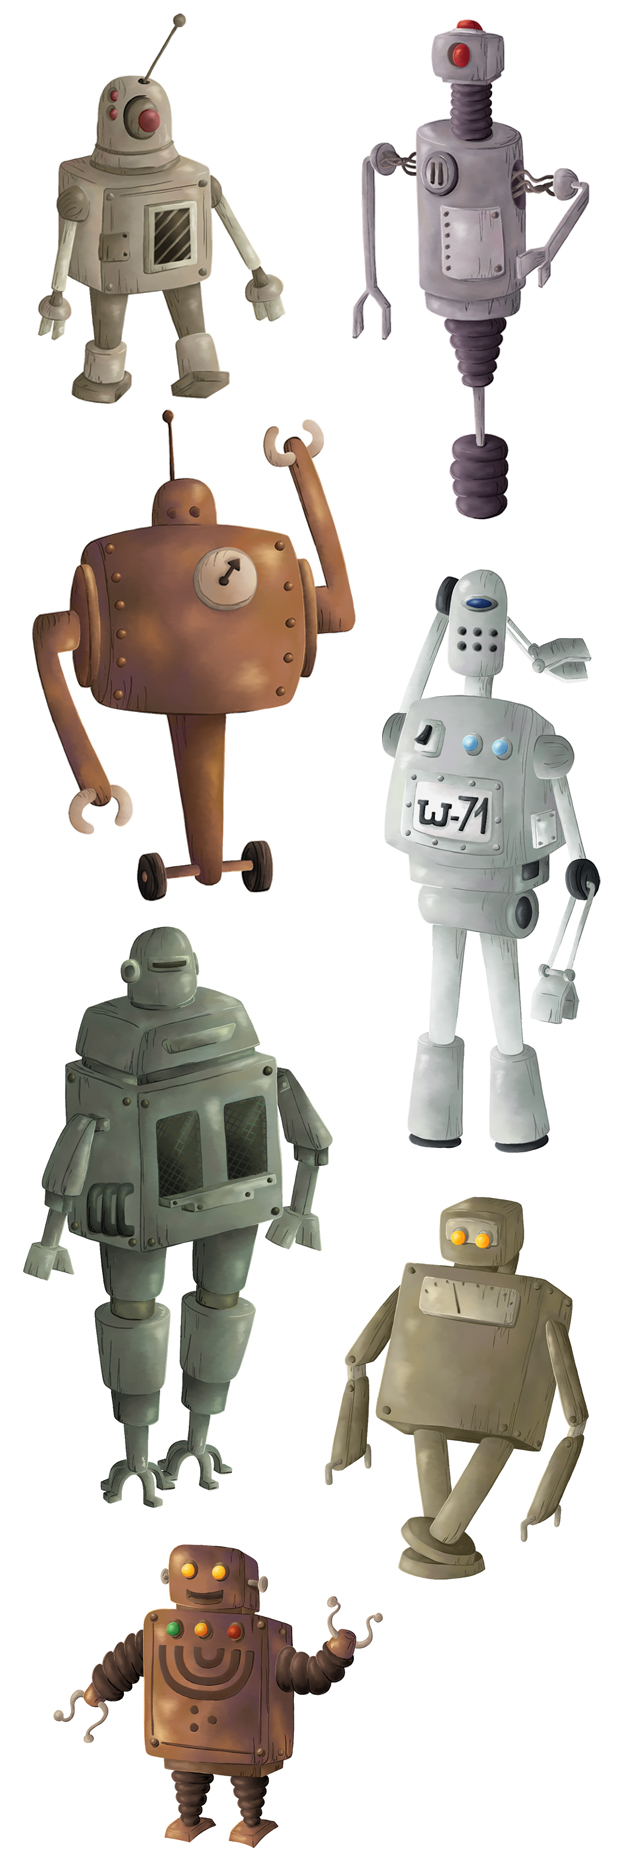 Character design robots